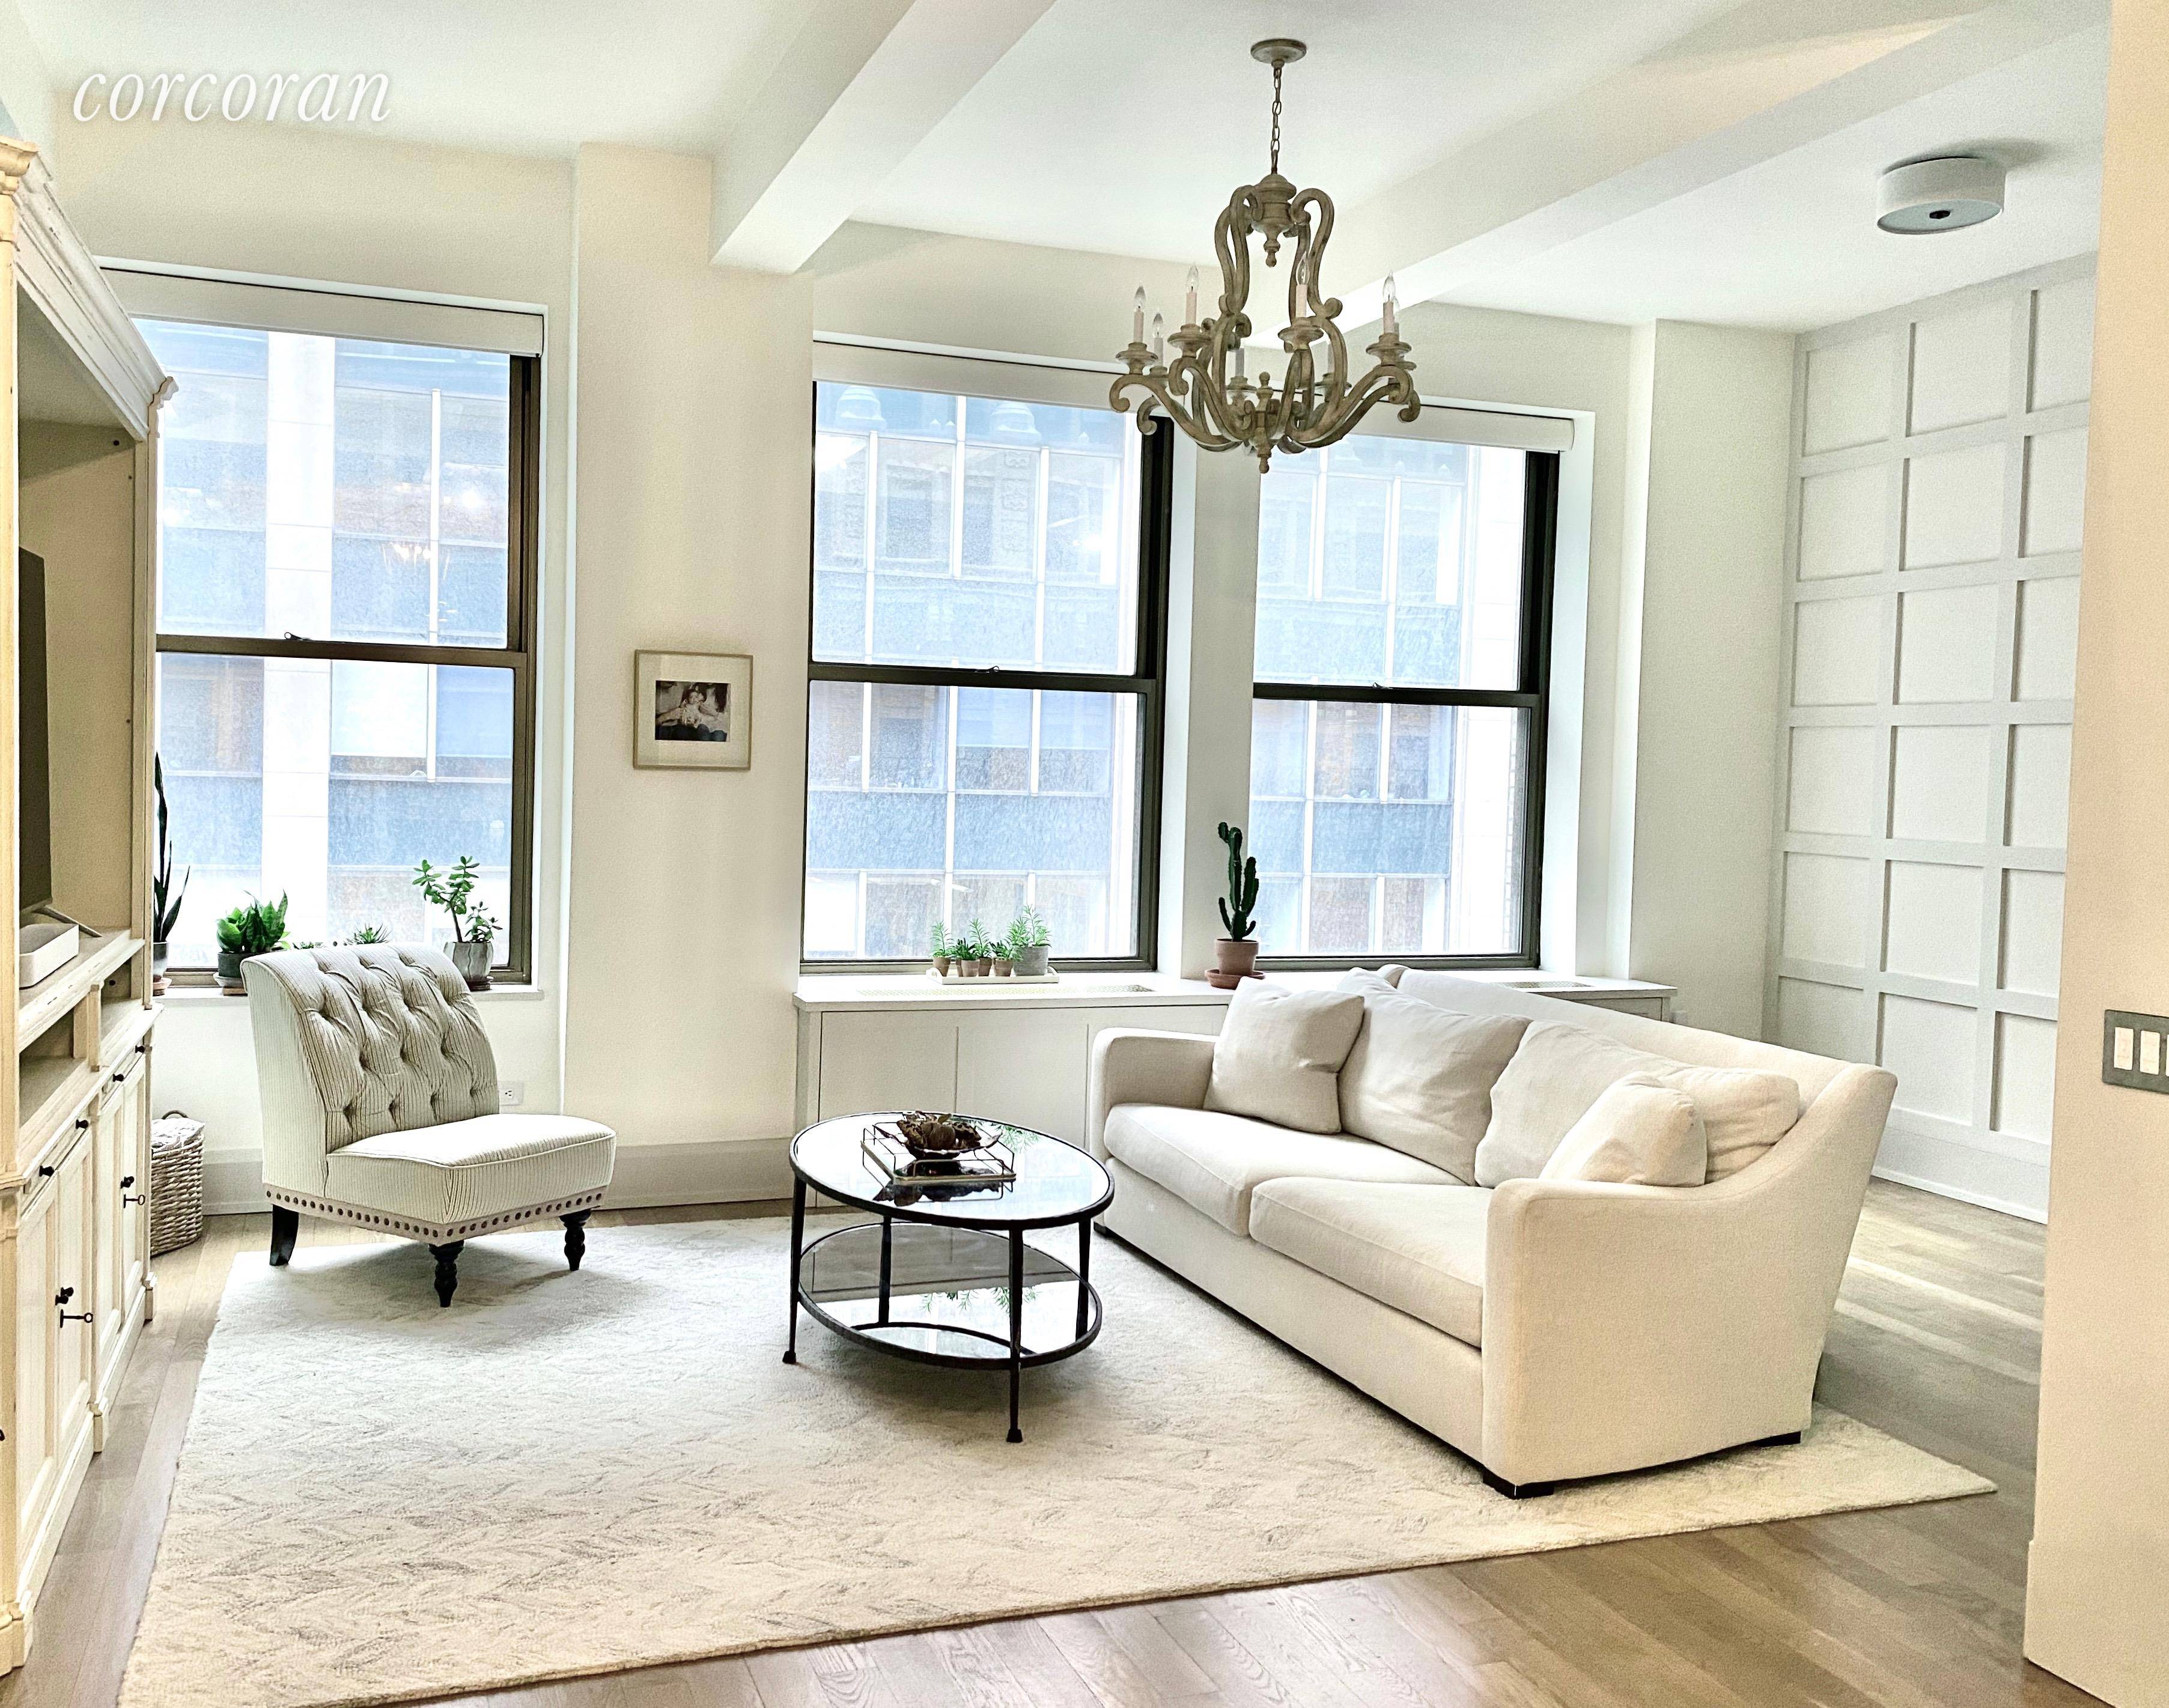 Stunning NoMad condominium loft offering modern luxury in a full service Pre War building.